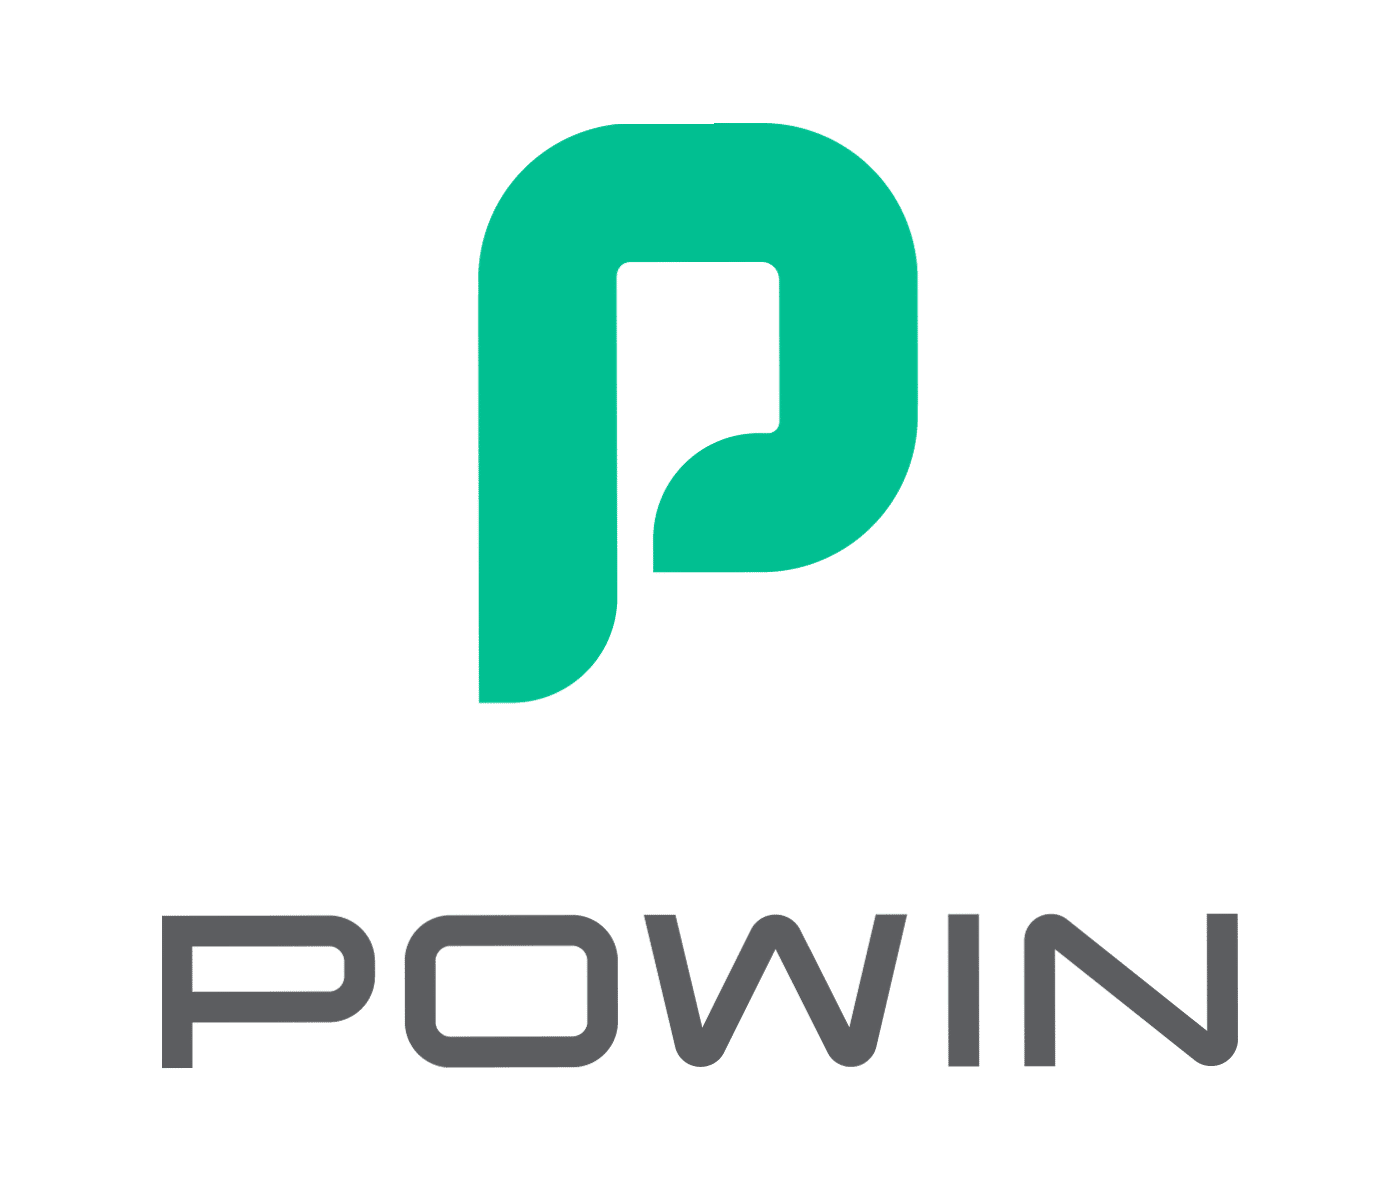 Powin logo